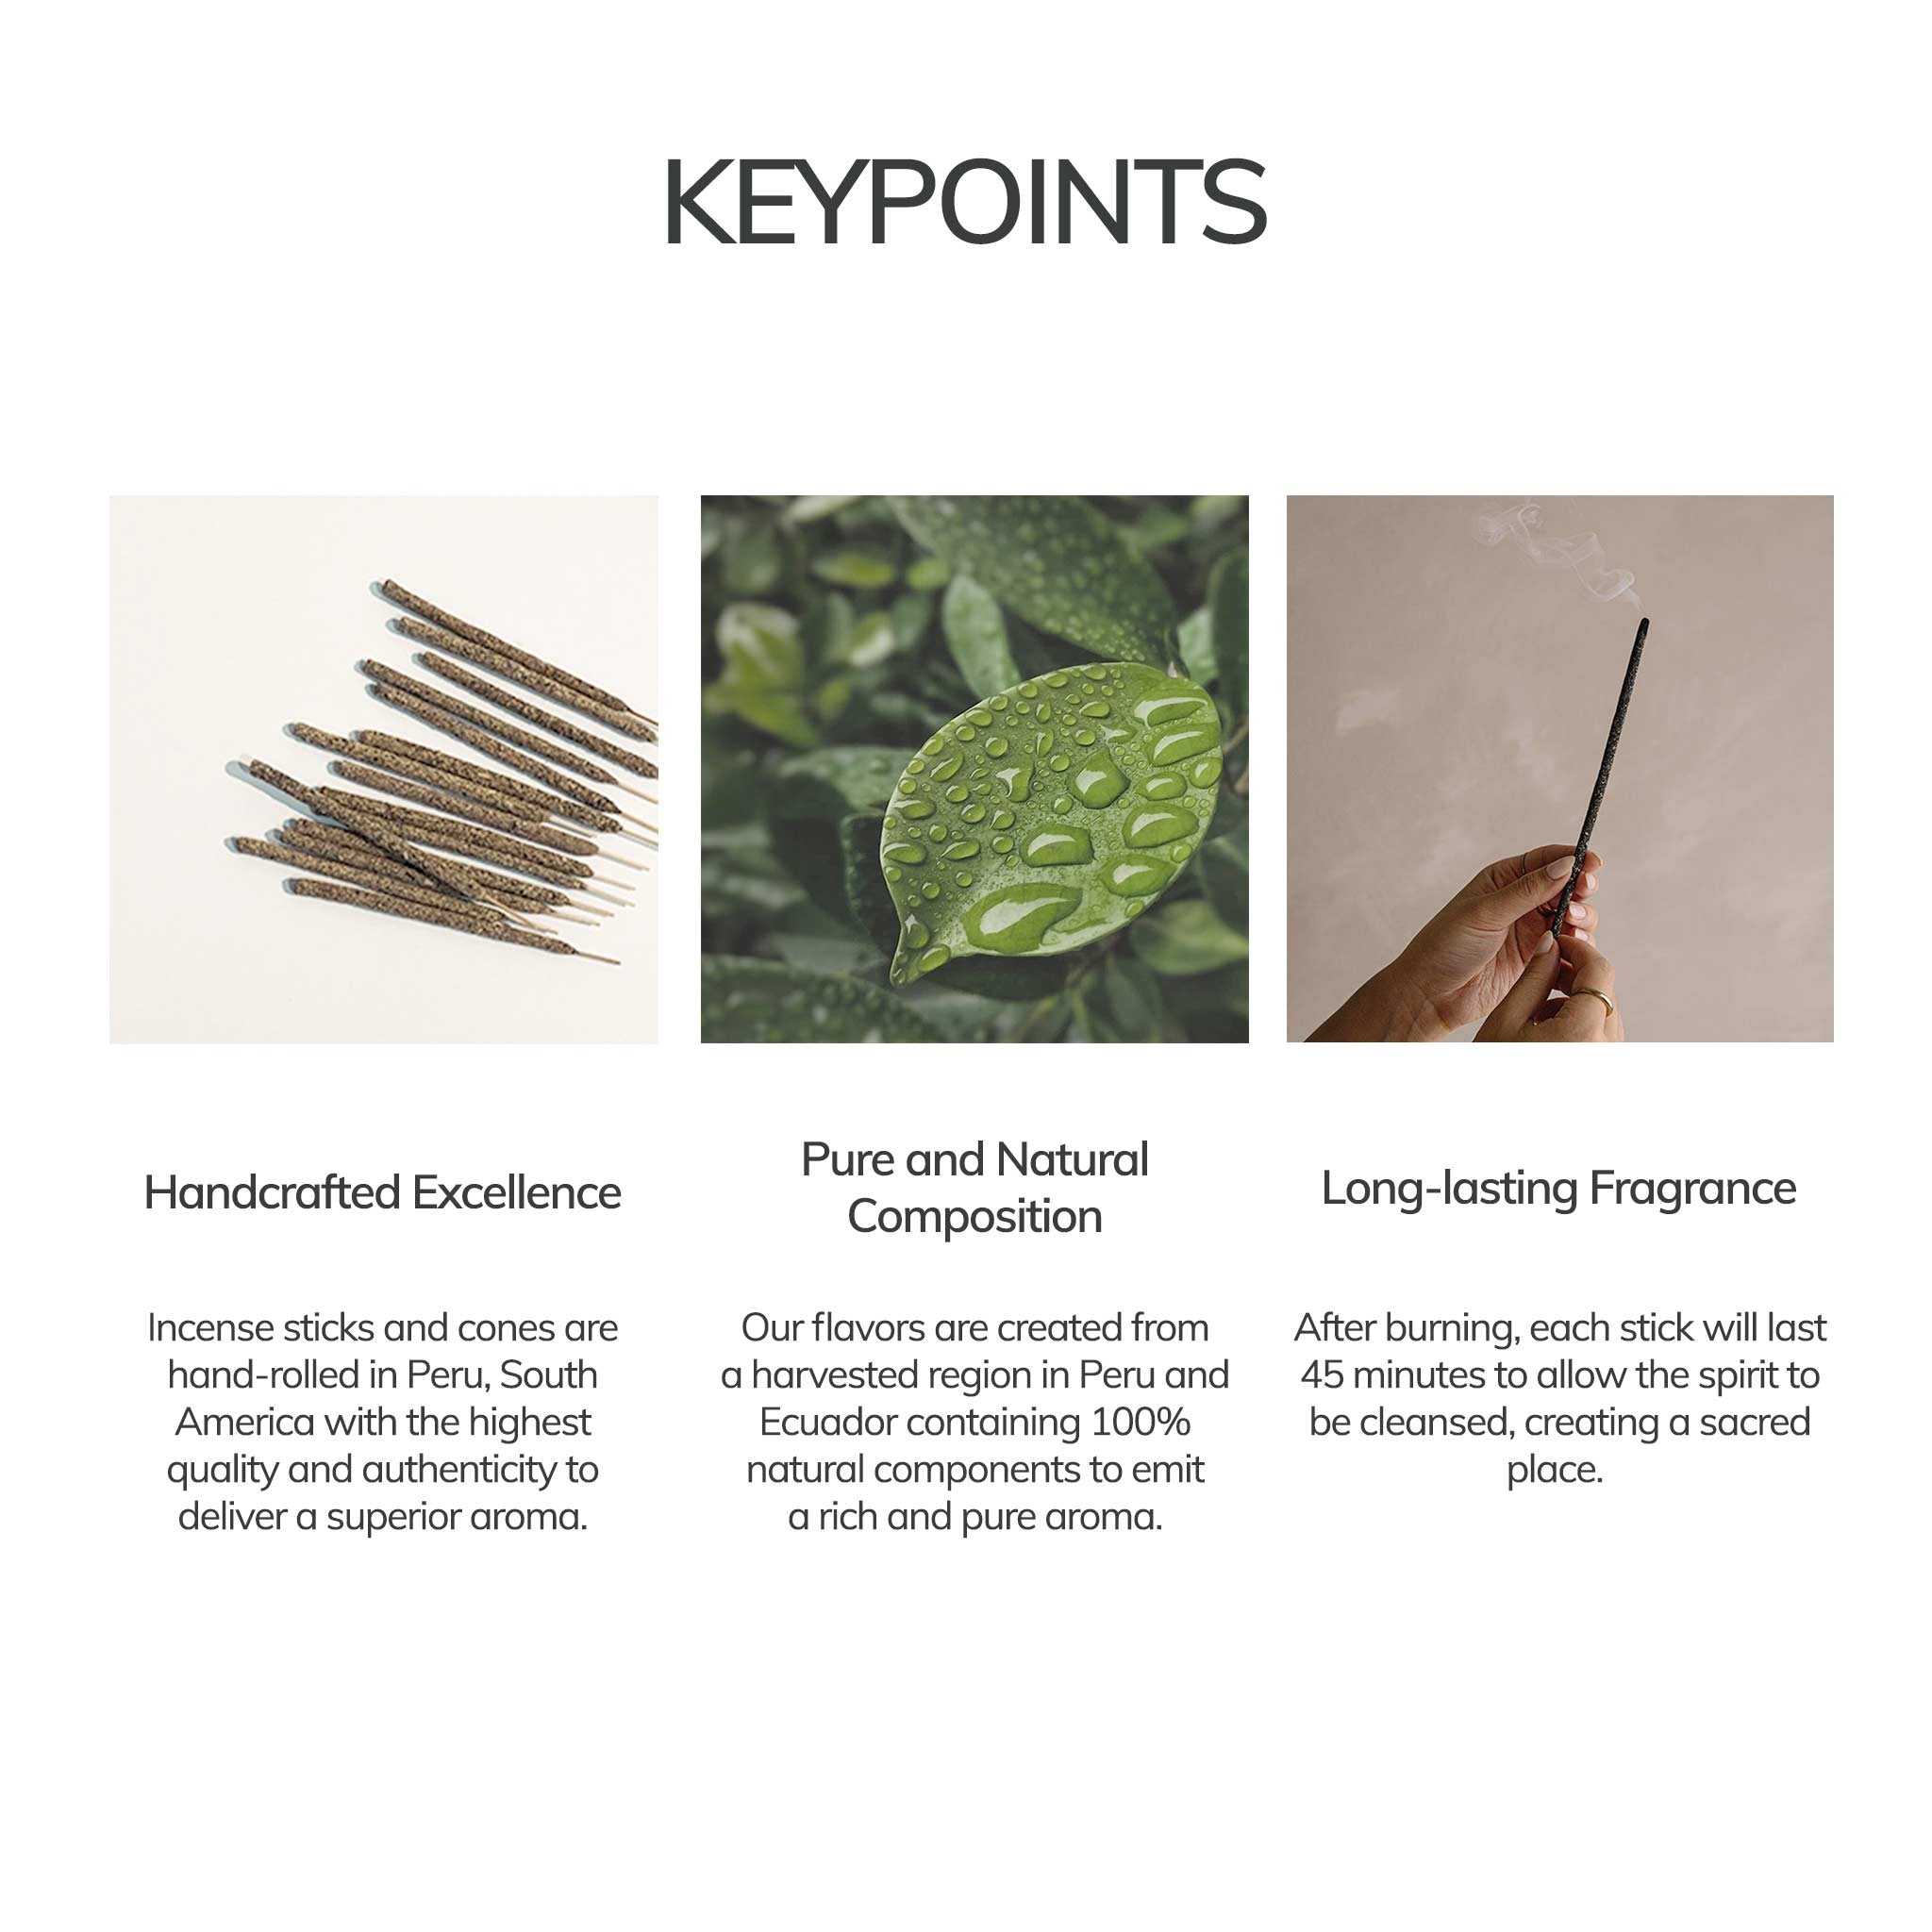 Main points: 1. mini incense sticks bundle; 2. several leaves; 3. holding burning incense stick.